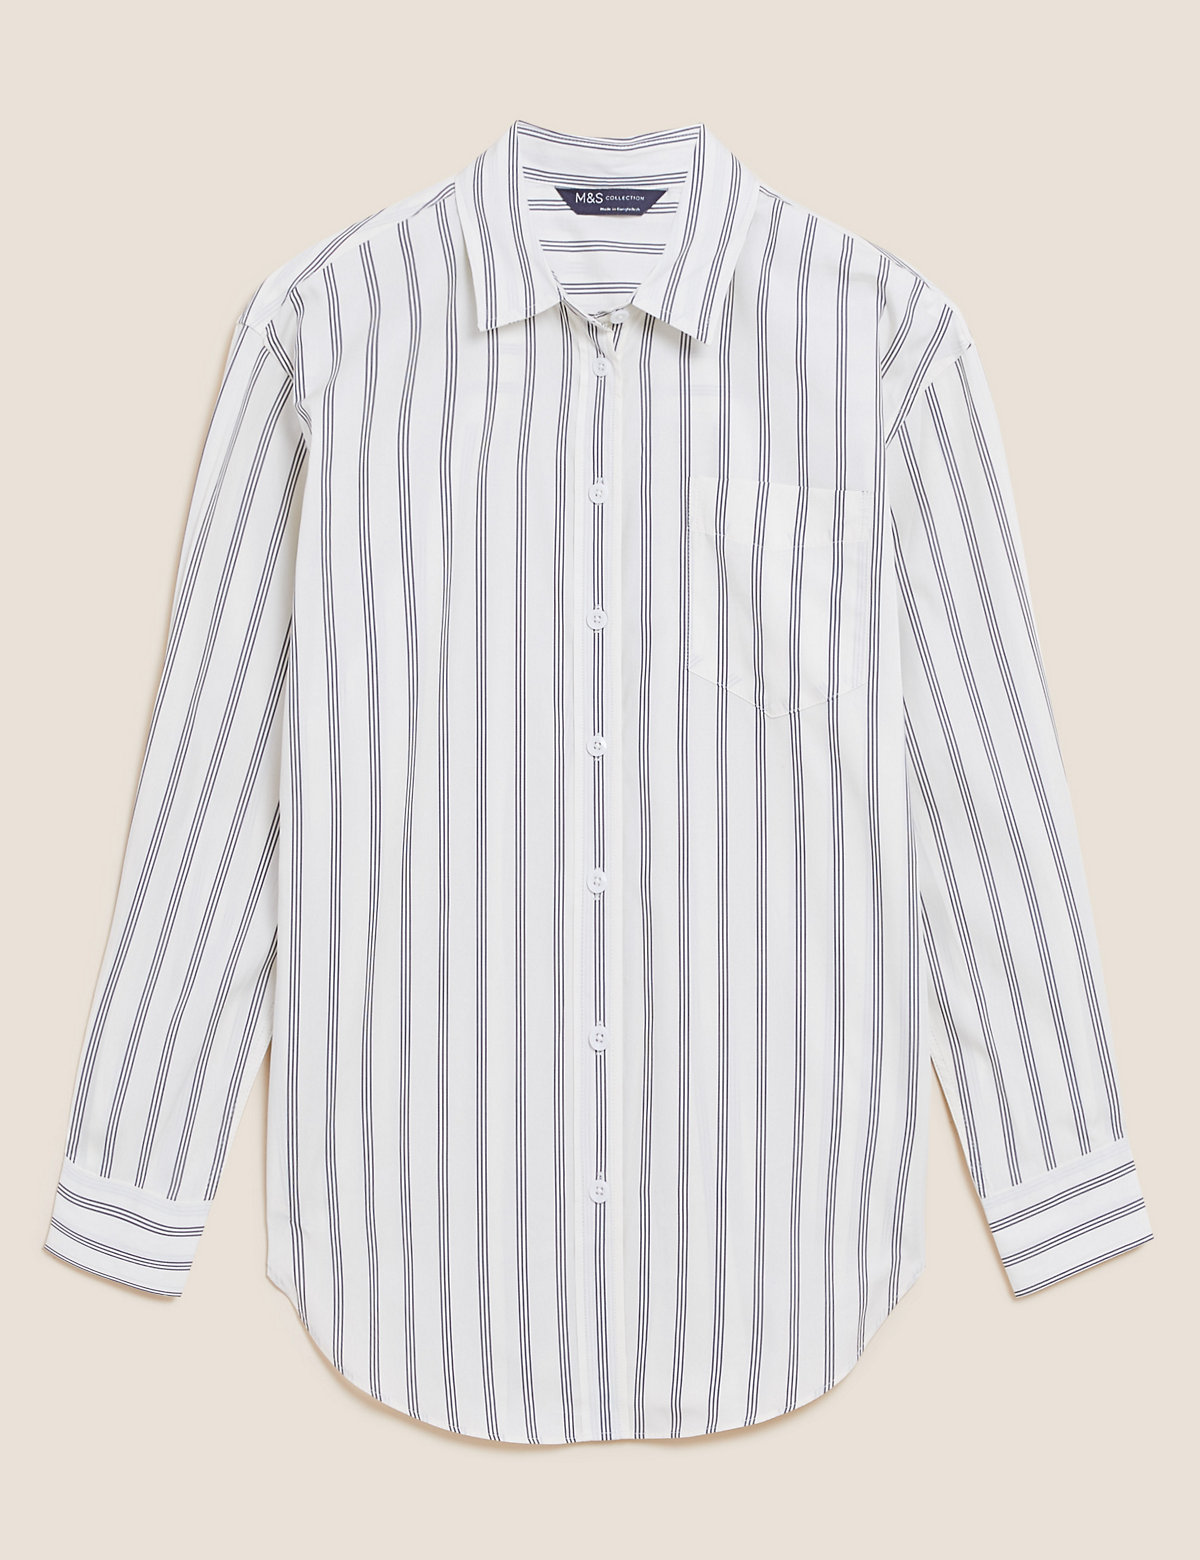 Pure Cotton Striped Oversized Girlfriend Style Shirt